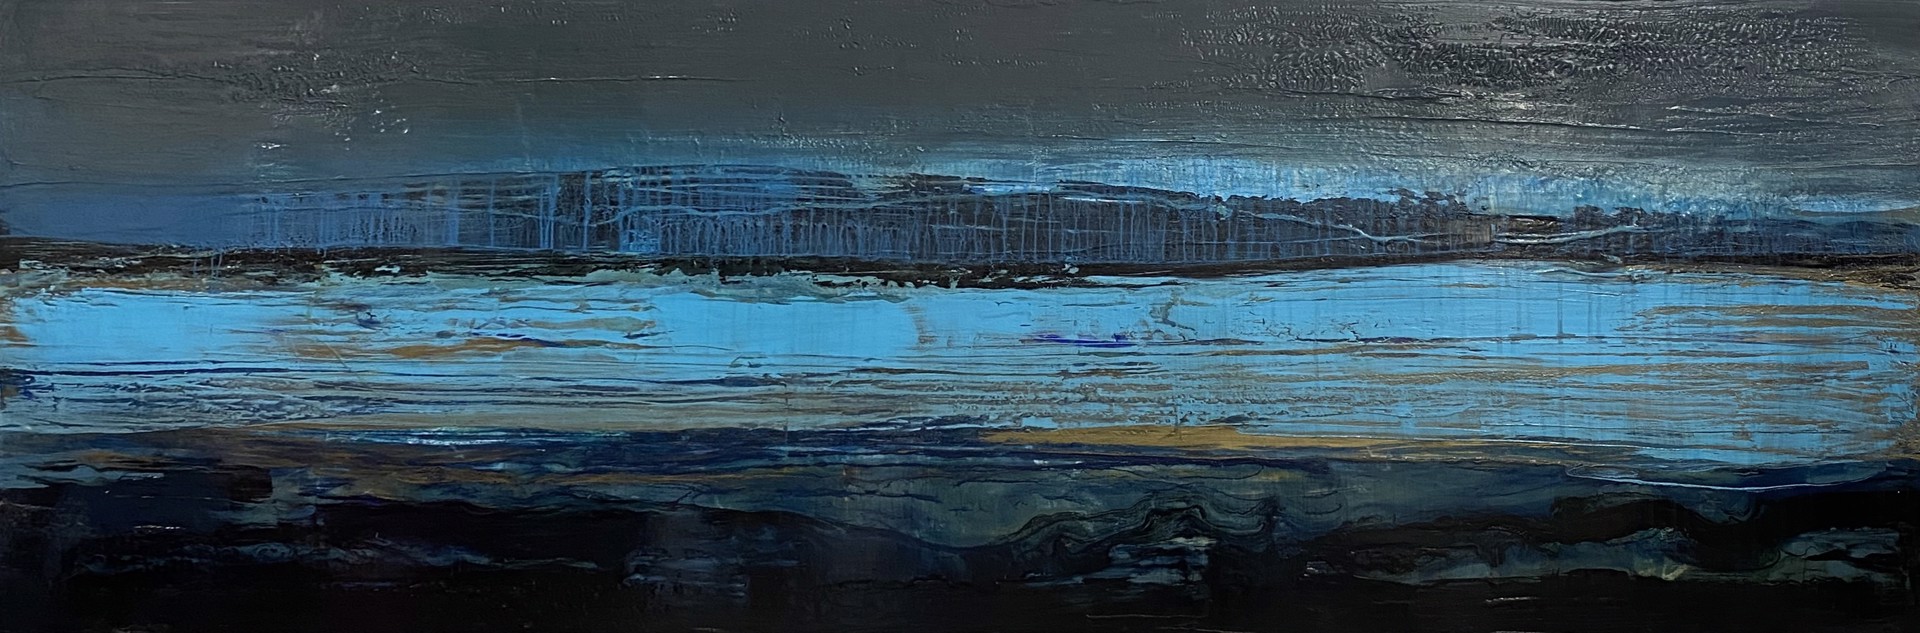 "Vast Sea" circa 2019 by Dominic Tortorici